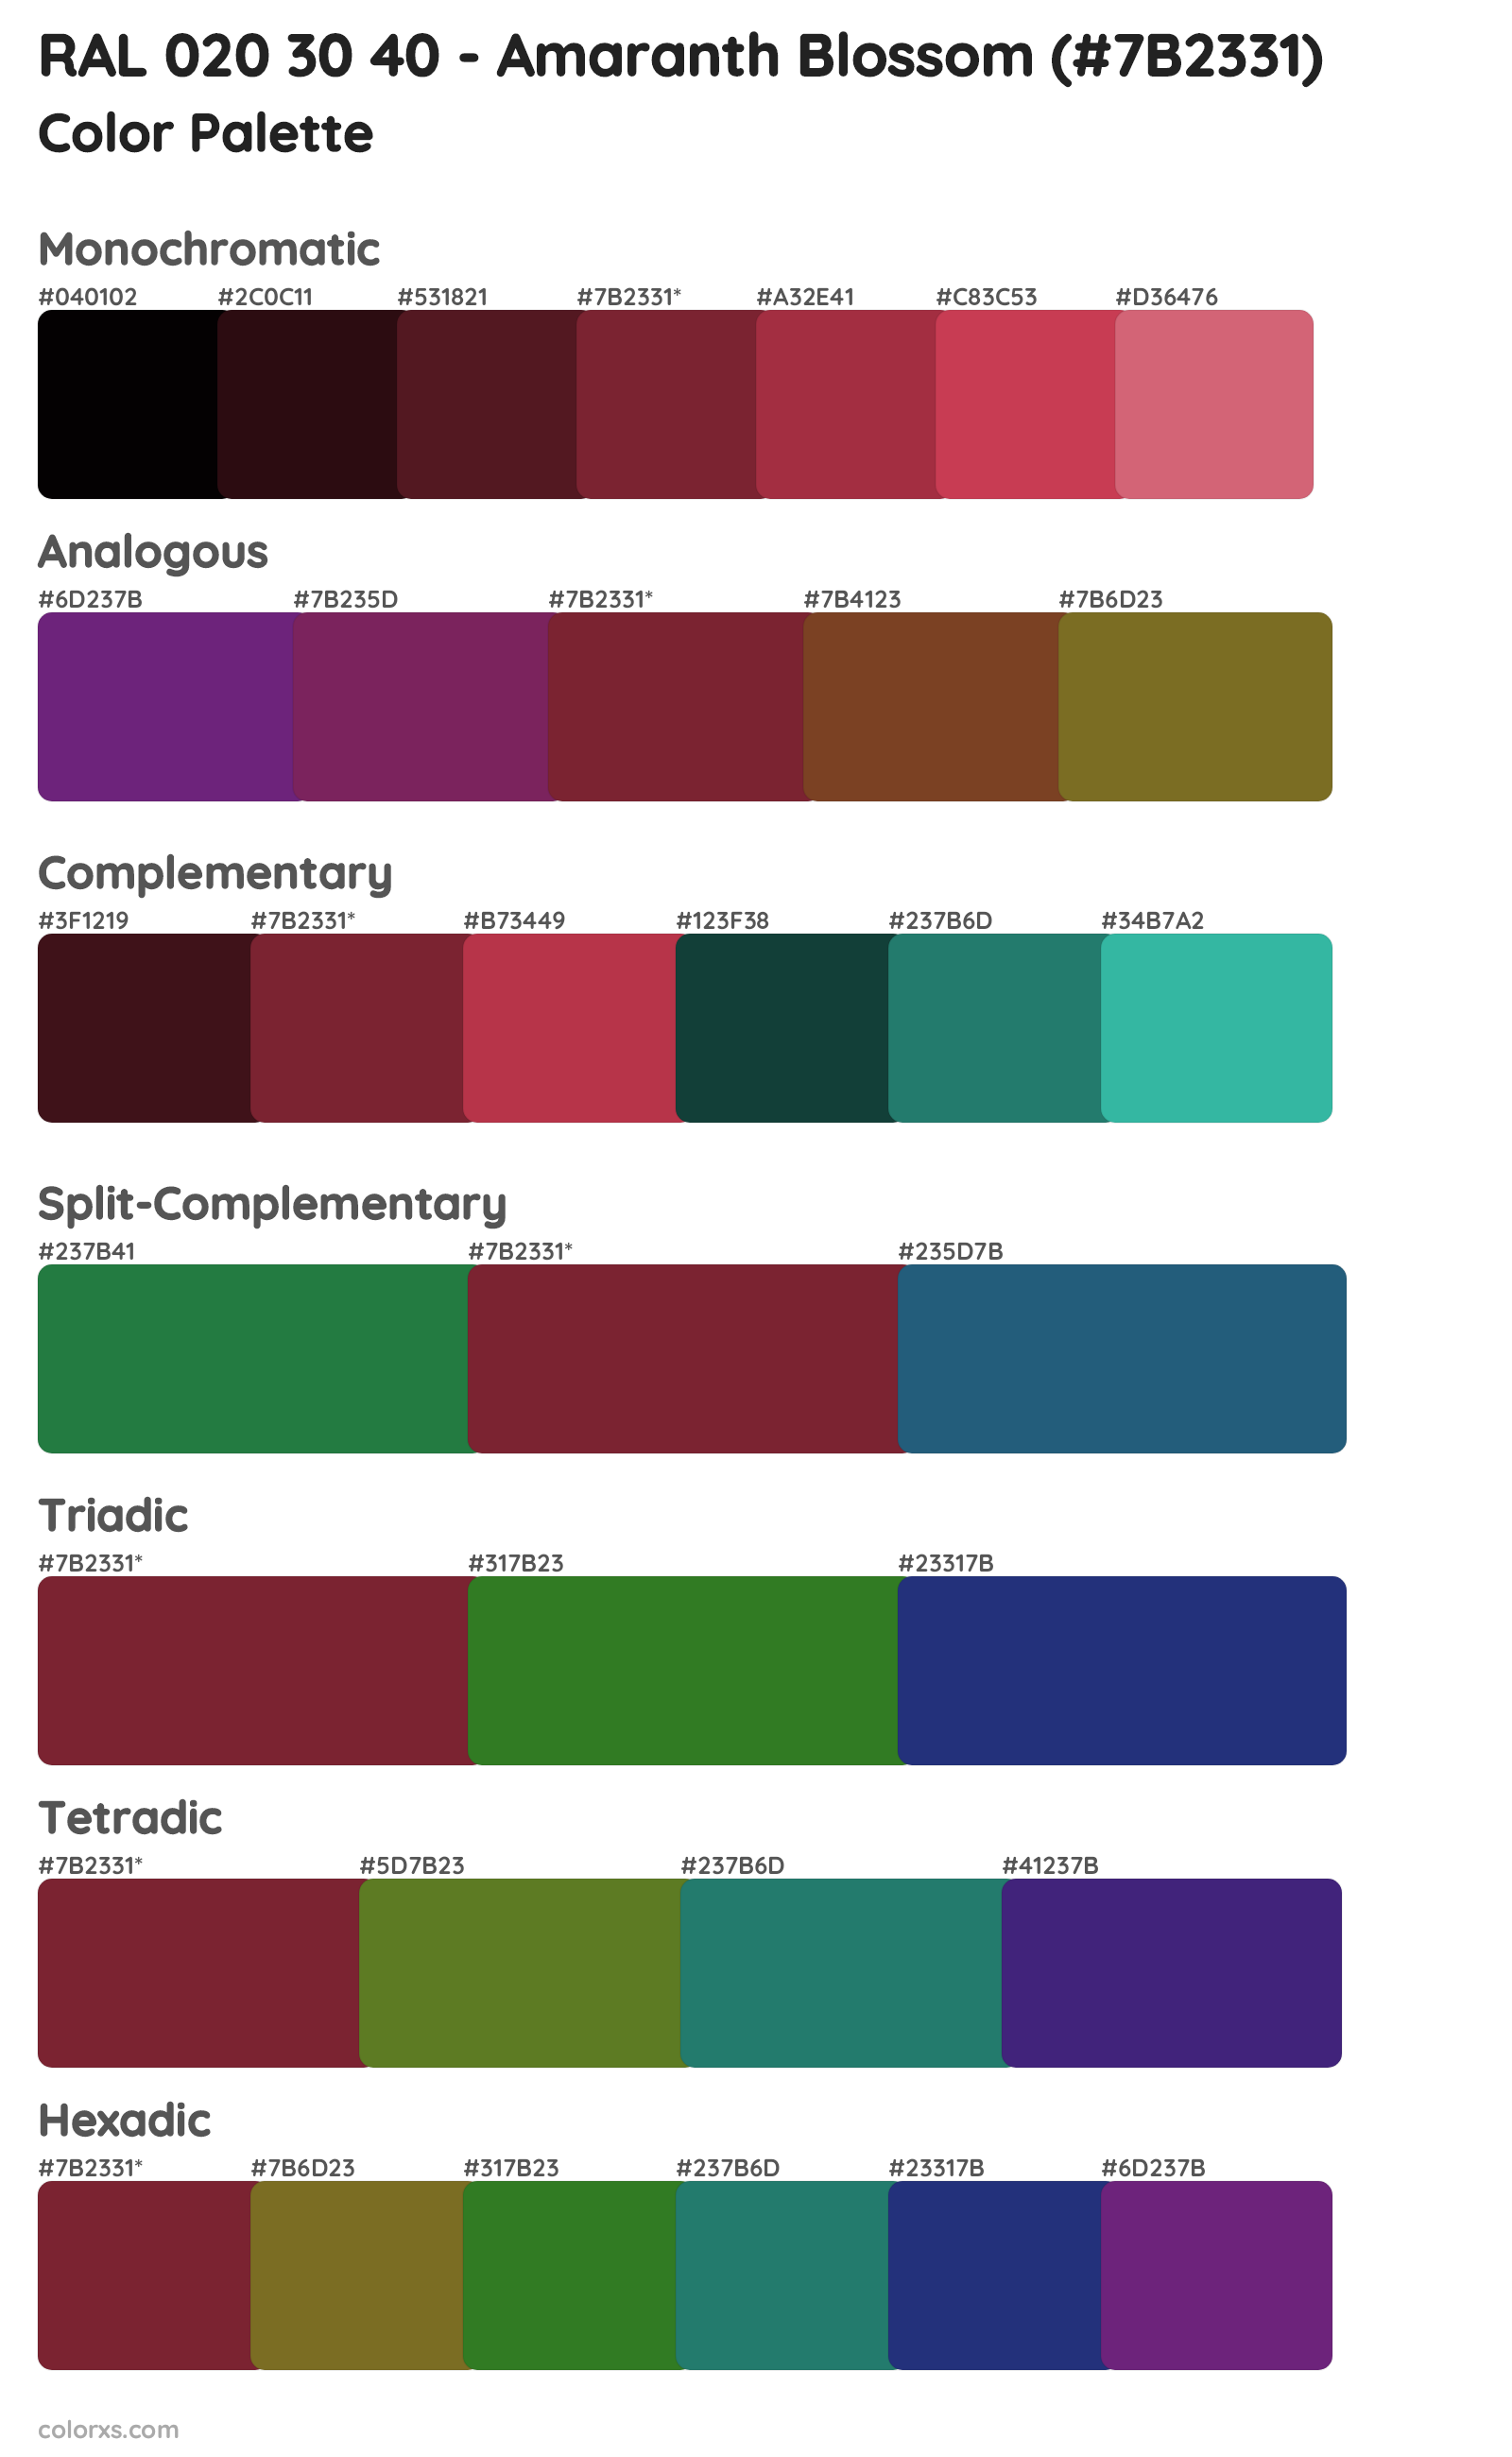 RAL 020 30 40 - Amaranth Blossom Color Scheme Palettes